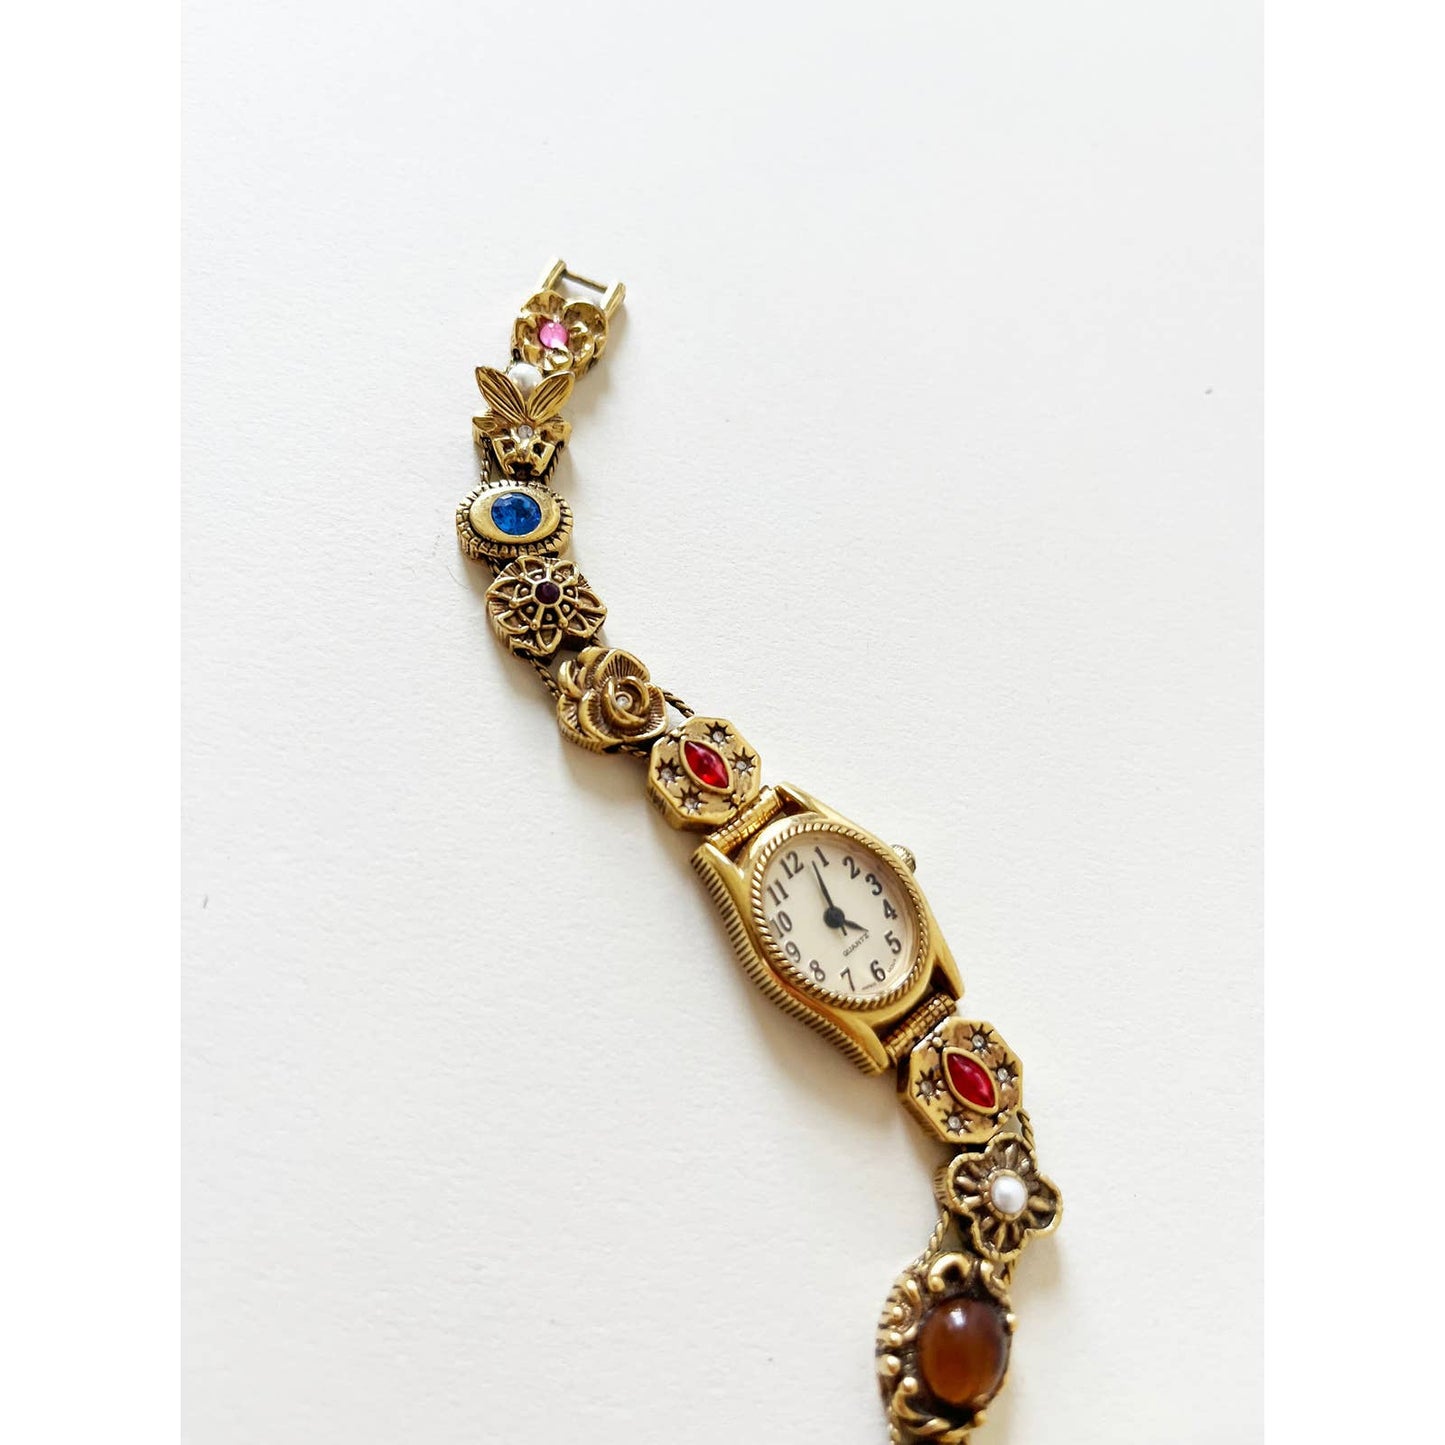 Vintage Rare Gold Charm Watch